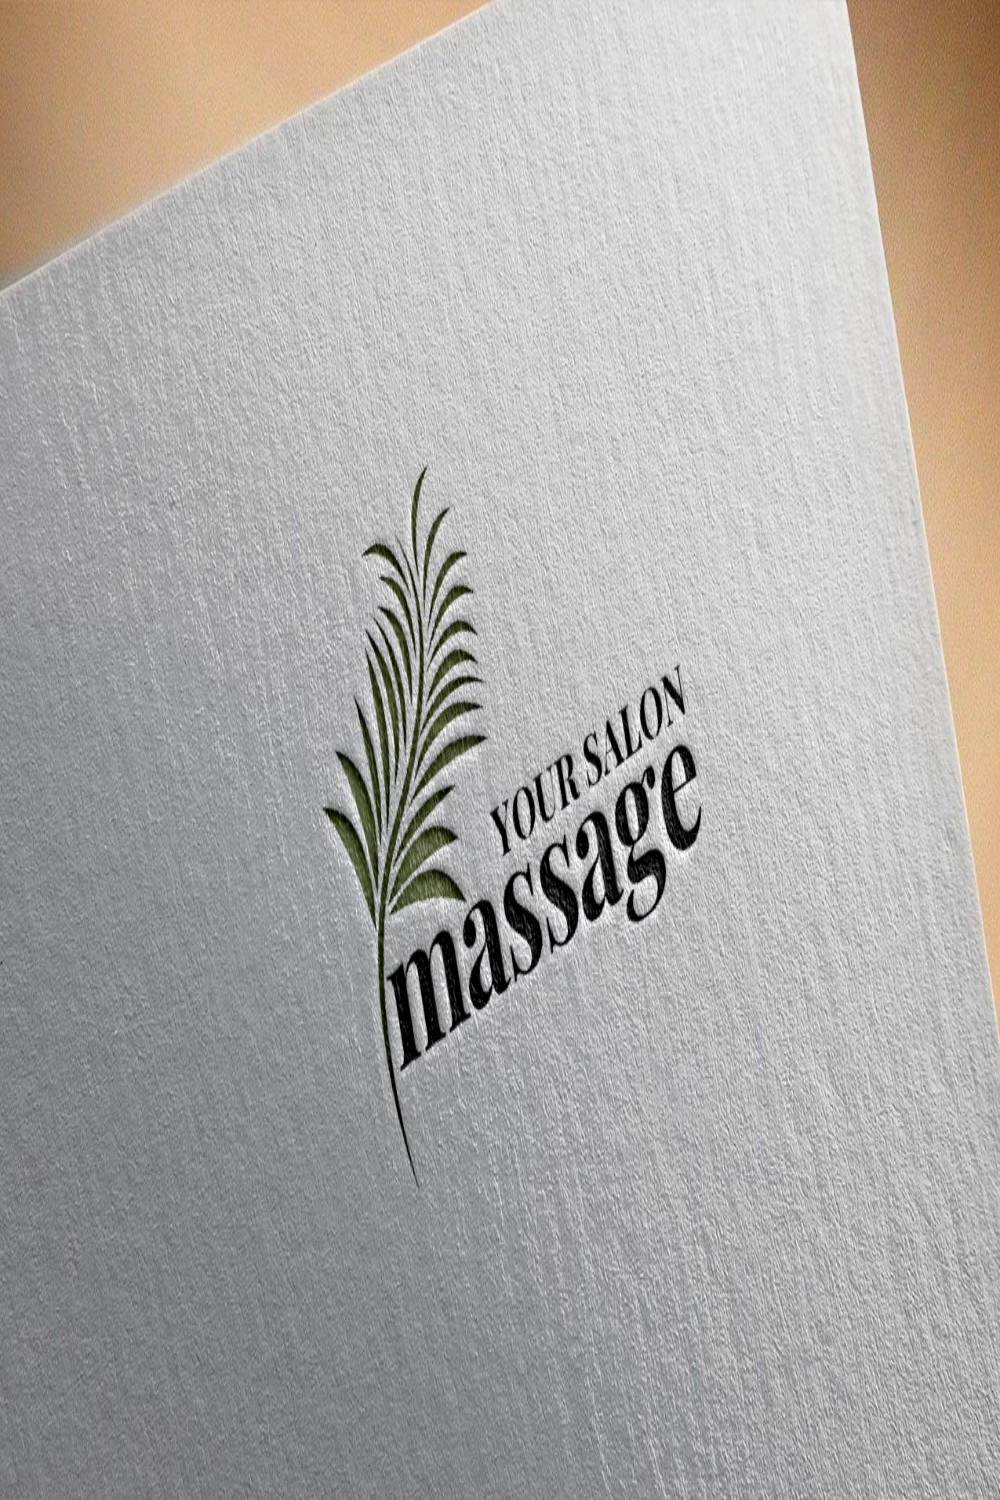 Massage Logo Design Pinterest image.